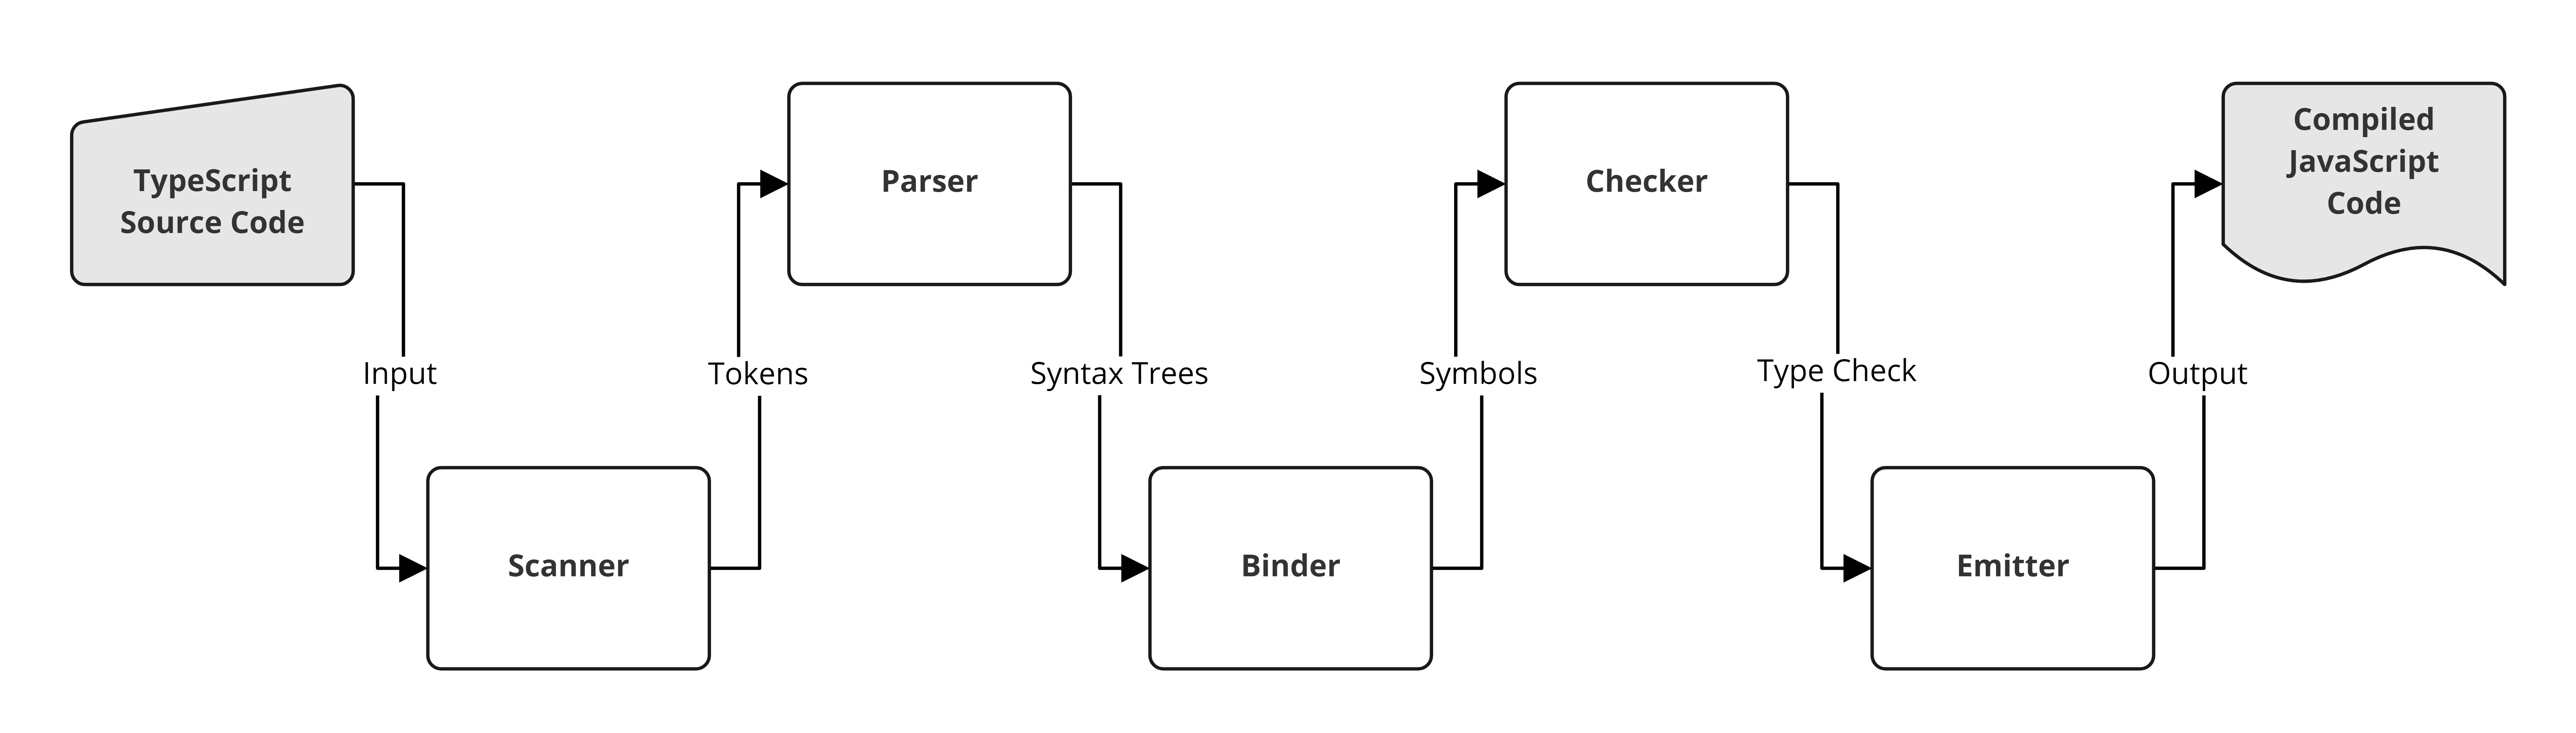 Architecture Diagram of the TypeScript Compiler